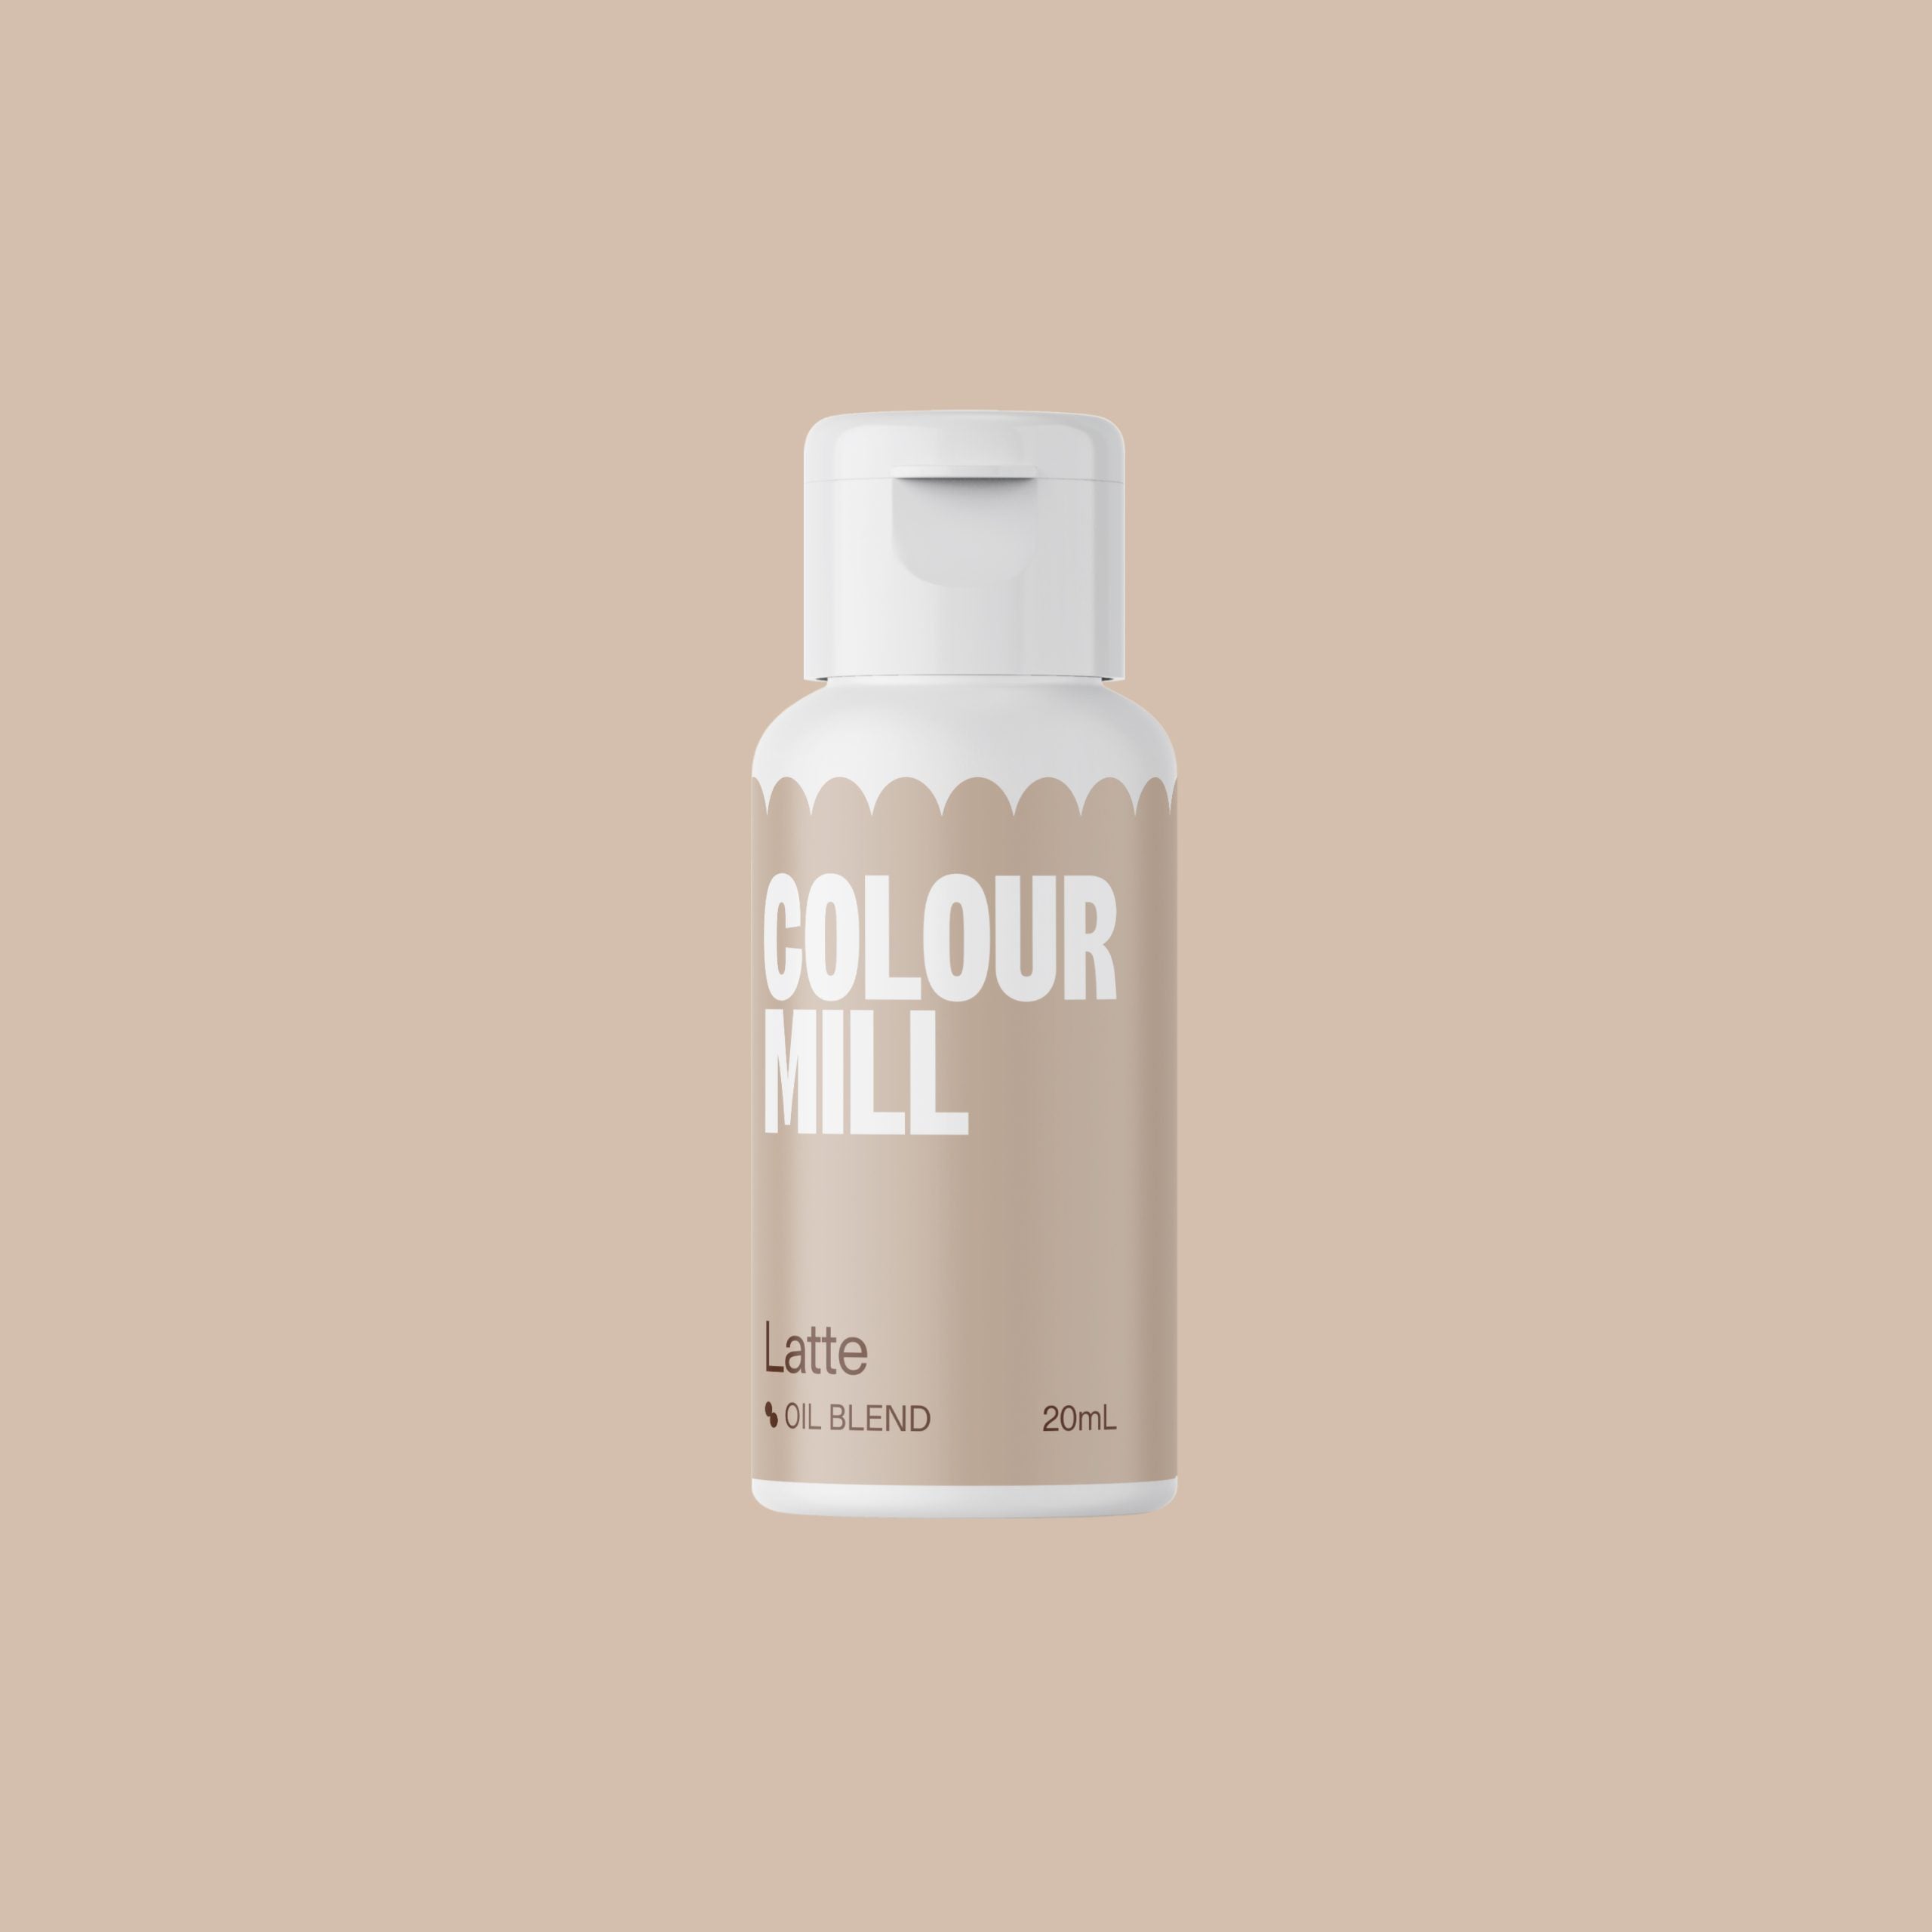 Colour Mill Oil Based Colouring 20ml - Latte